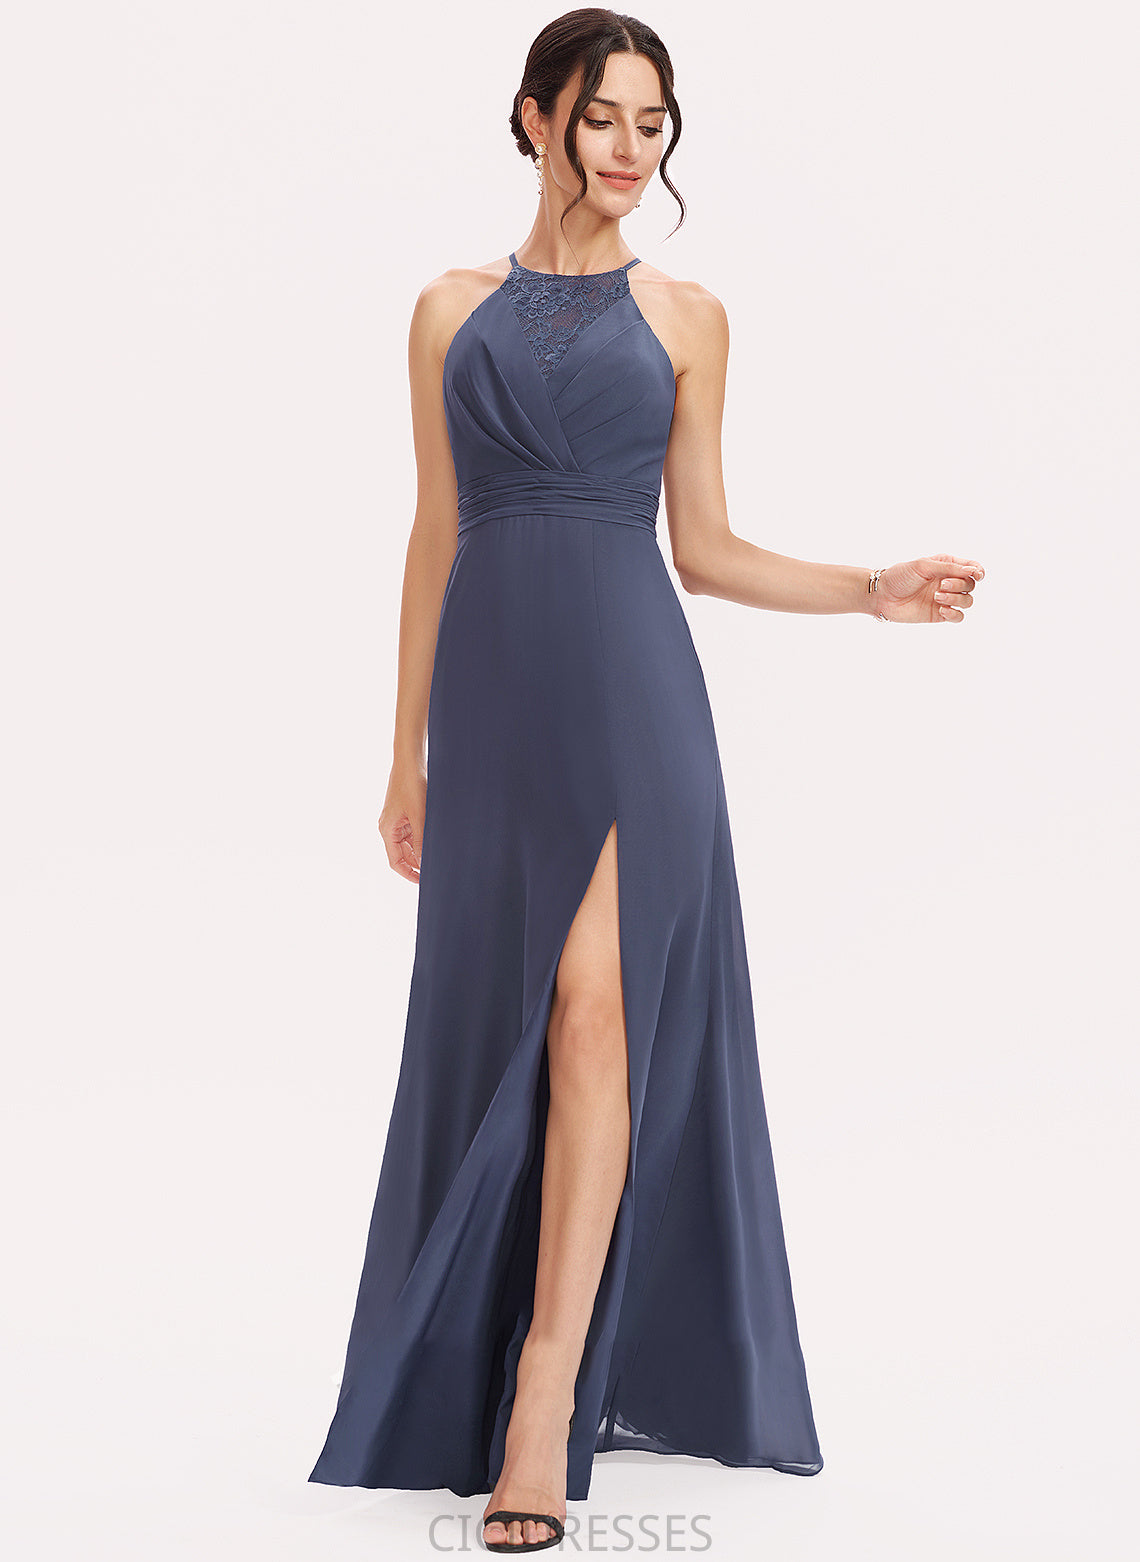 Length Halter SplitFront Neckline Floor-Length Lace Embellishment A-Line Fabric Silhouette Itzel Natural Waist Bridesmaid Dresses